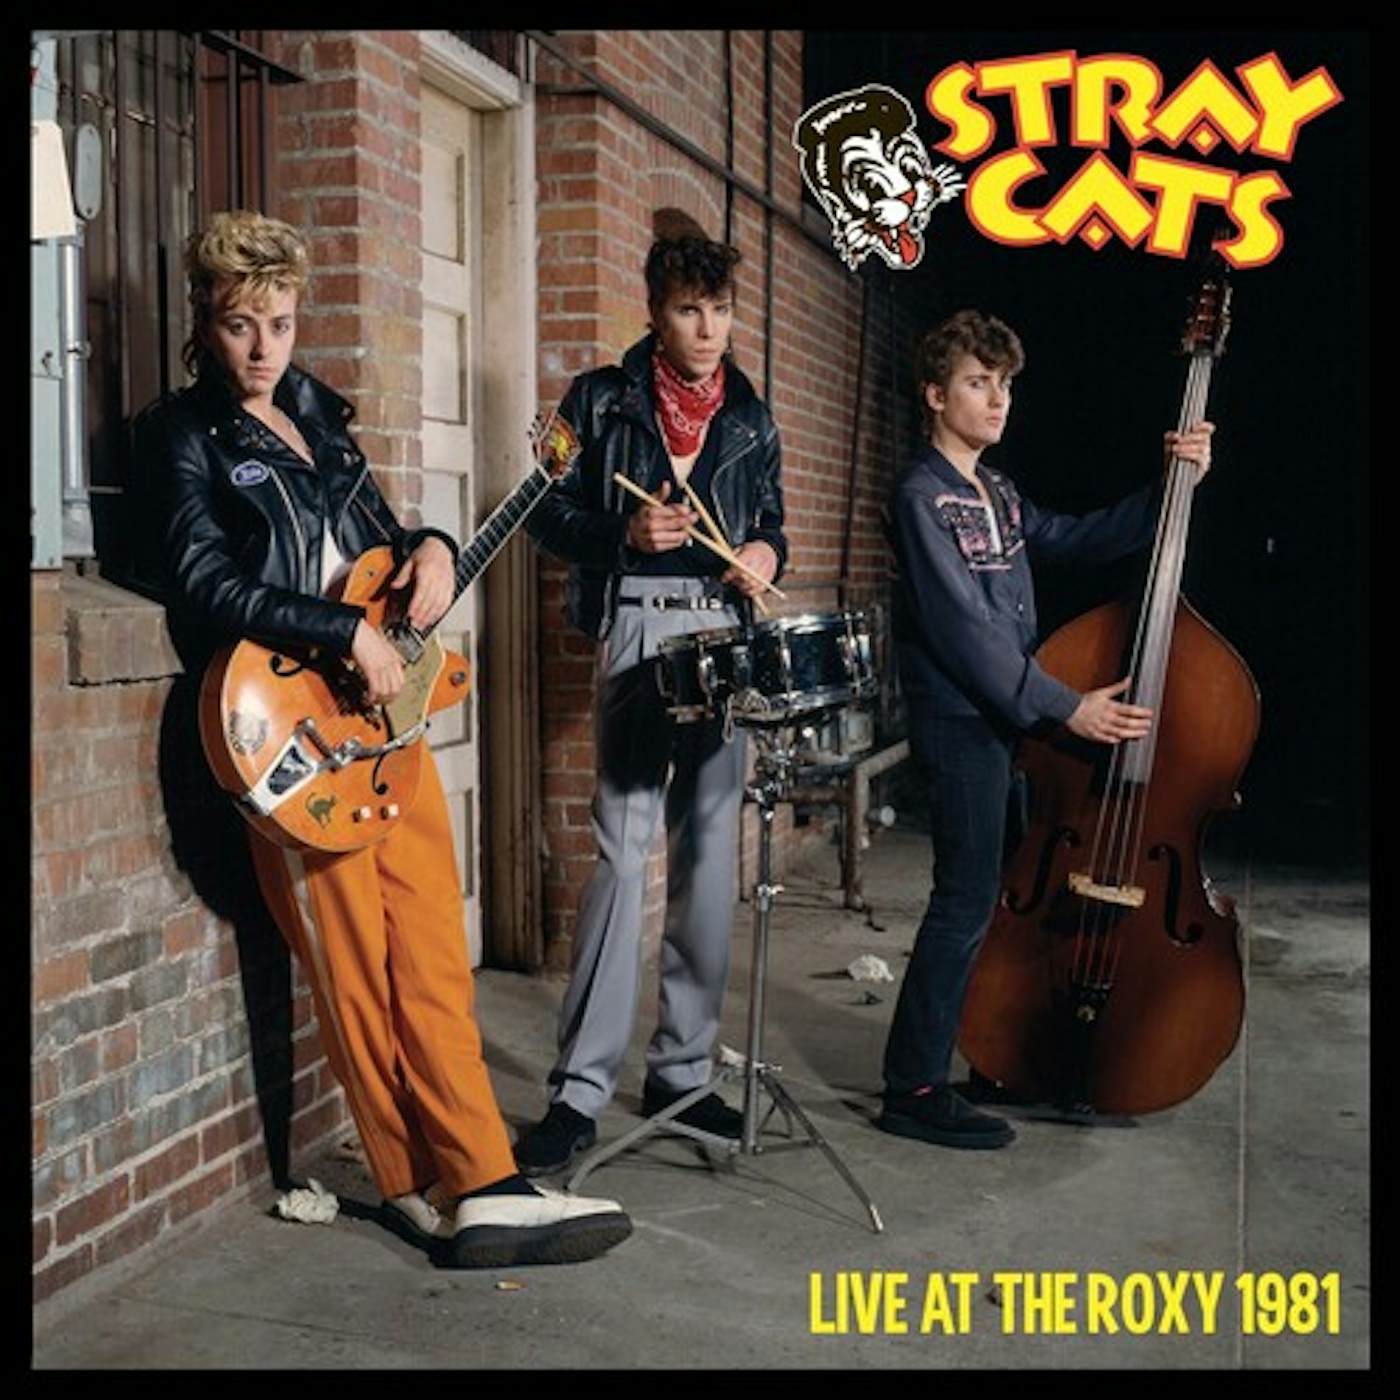 Stray Cats Live At The Roxy 1981 - Gold/black Splatter Vinyl Record